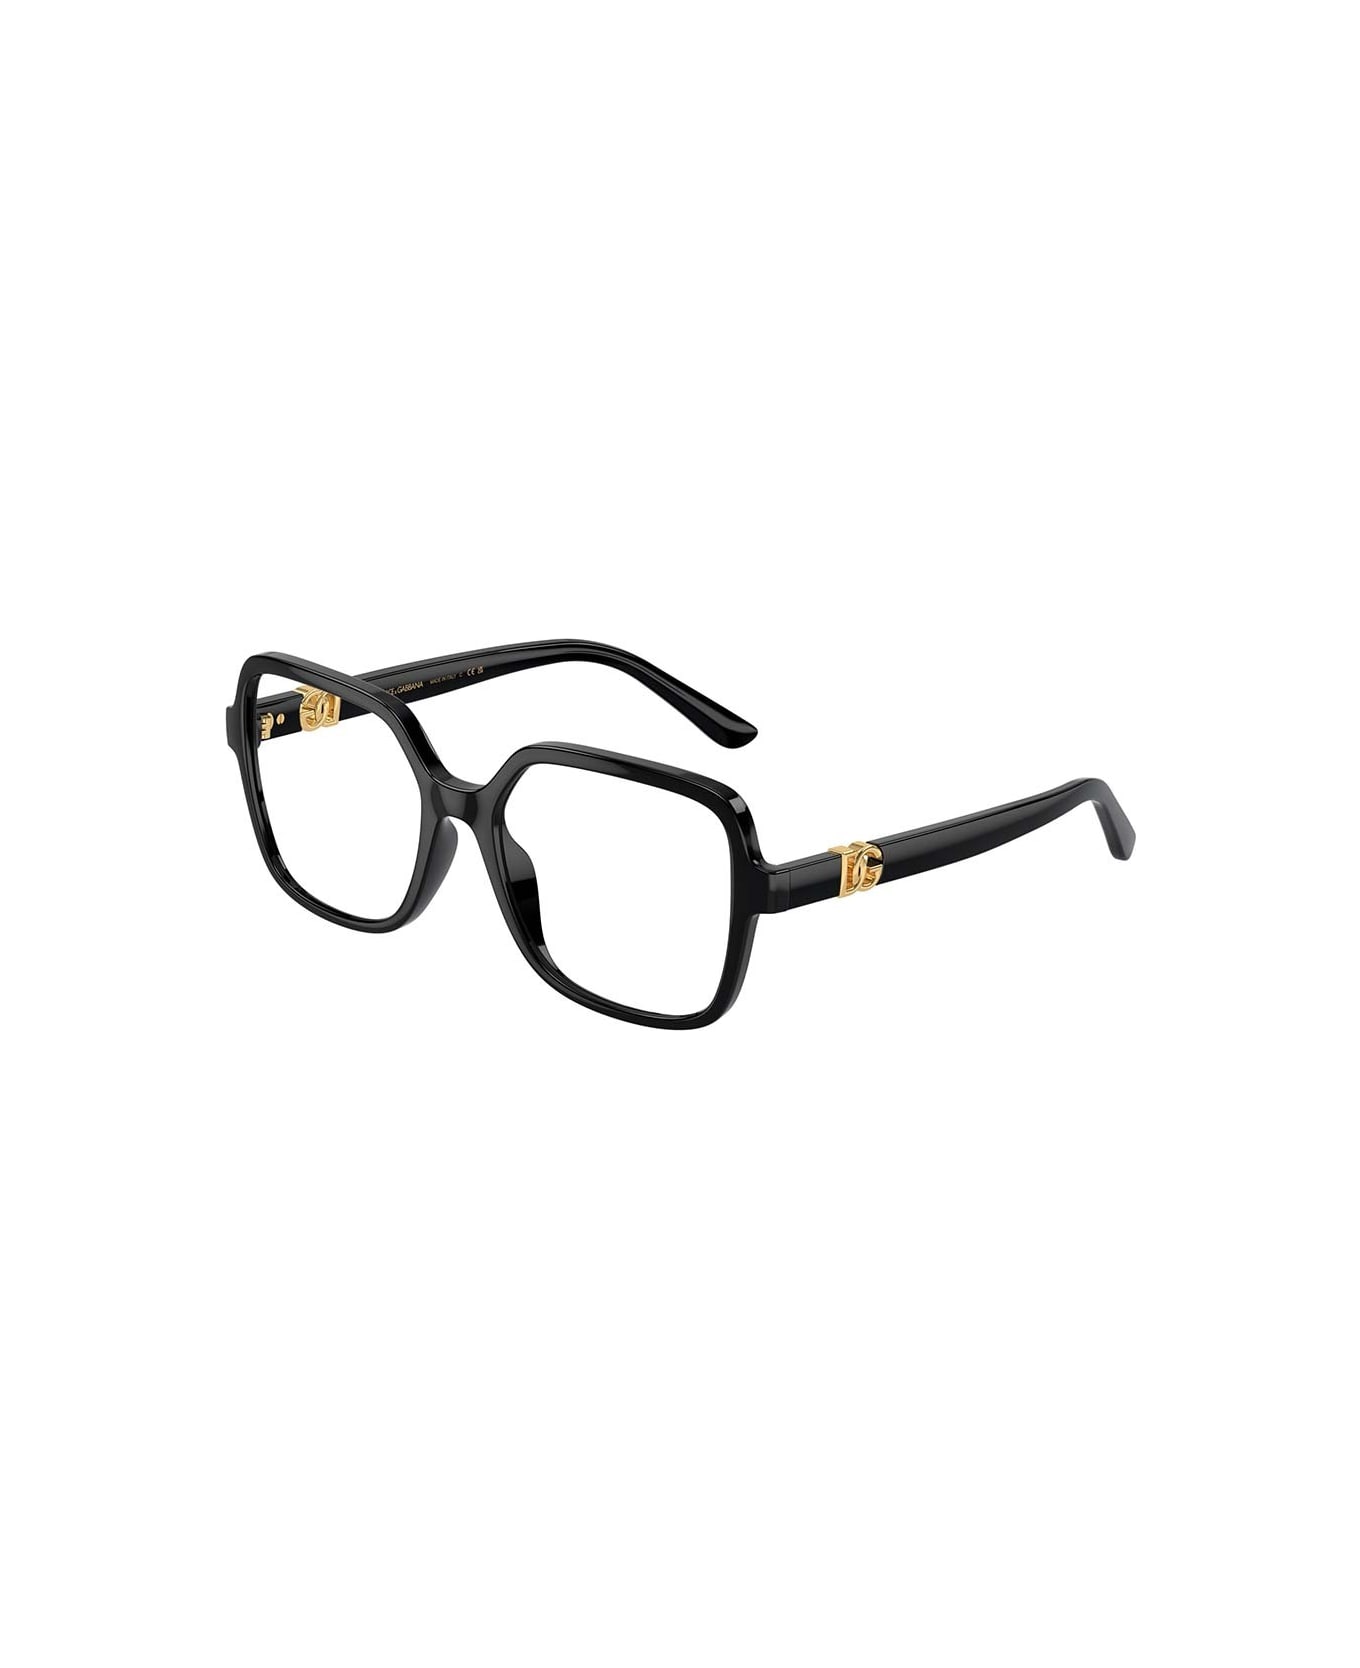 Dolce & Gabbana Eyewear Glasses - Nero